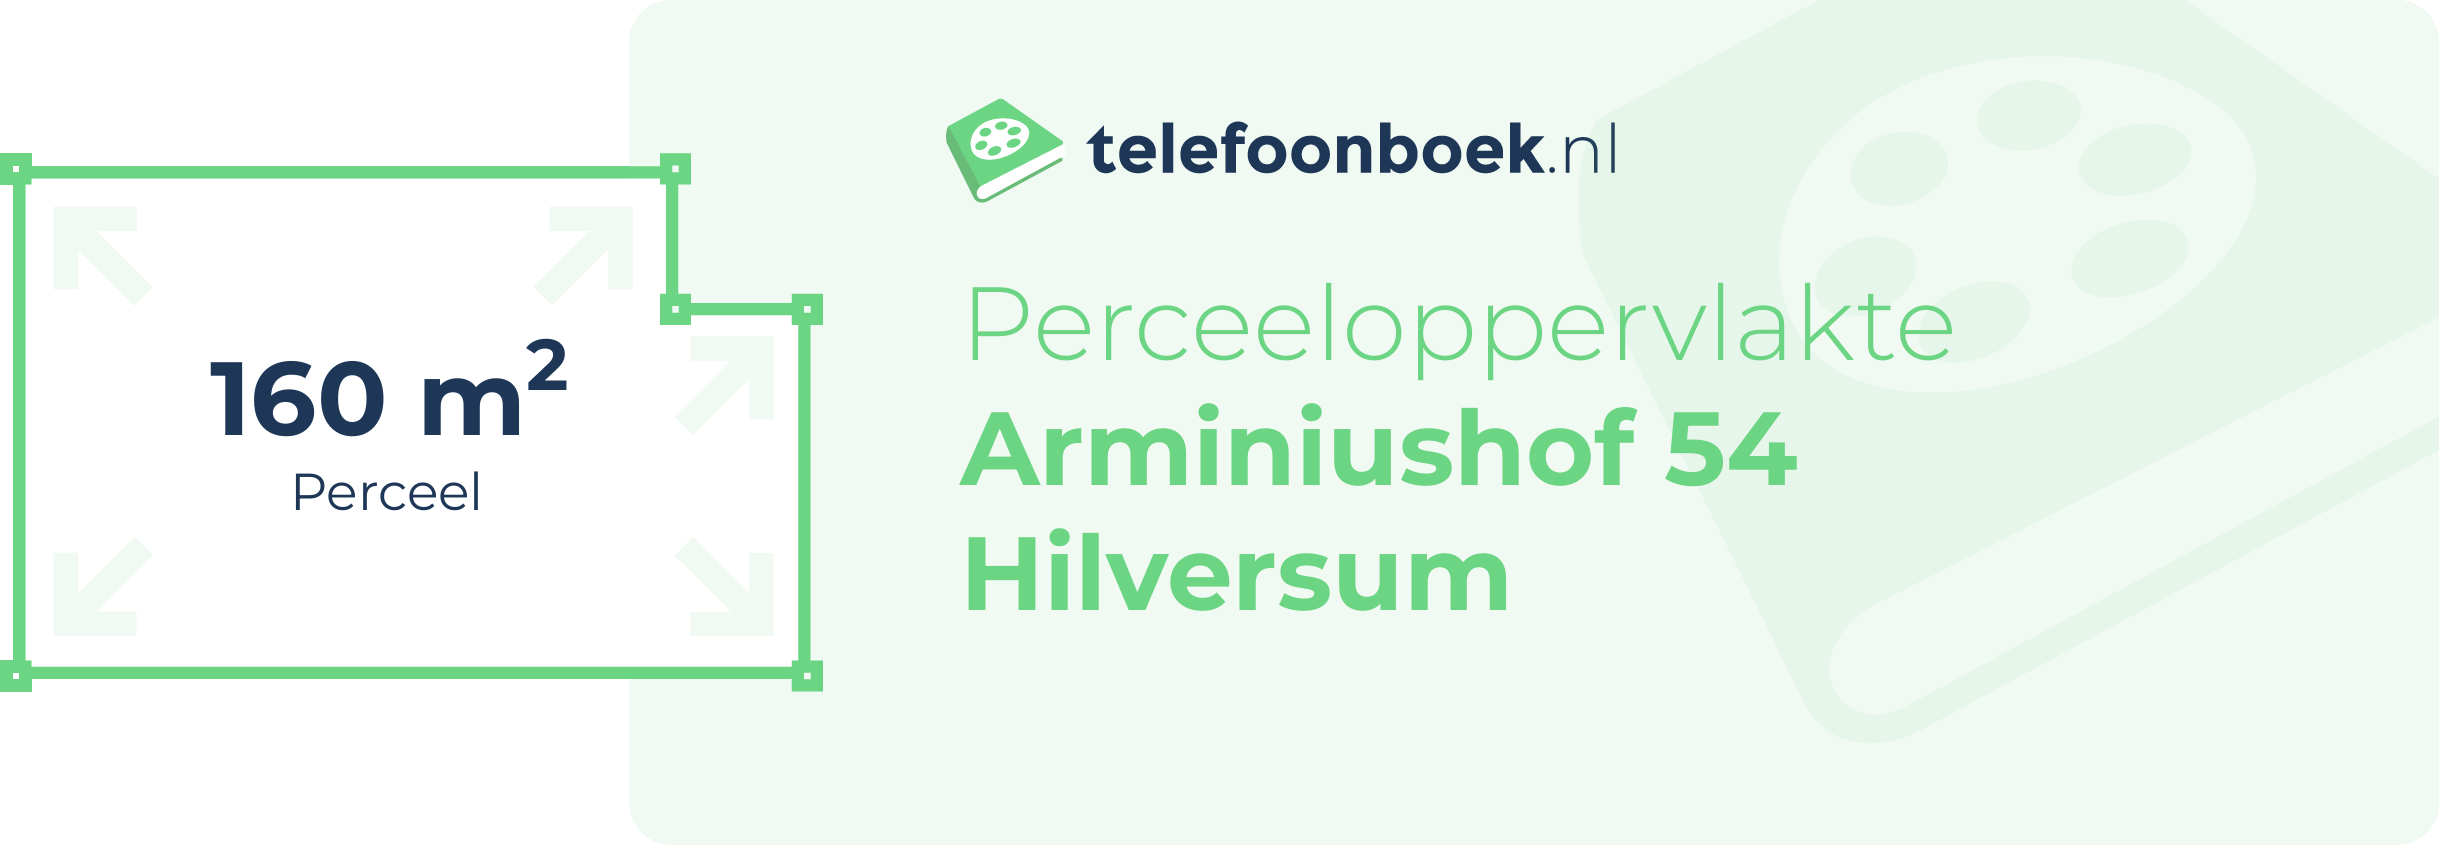 Perceeloppervlakte Arminiushof 54 Hilversum